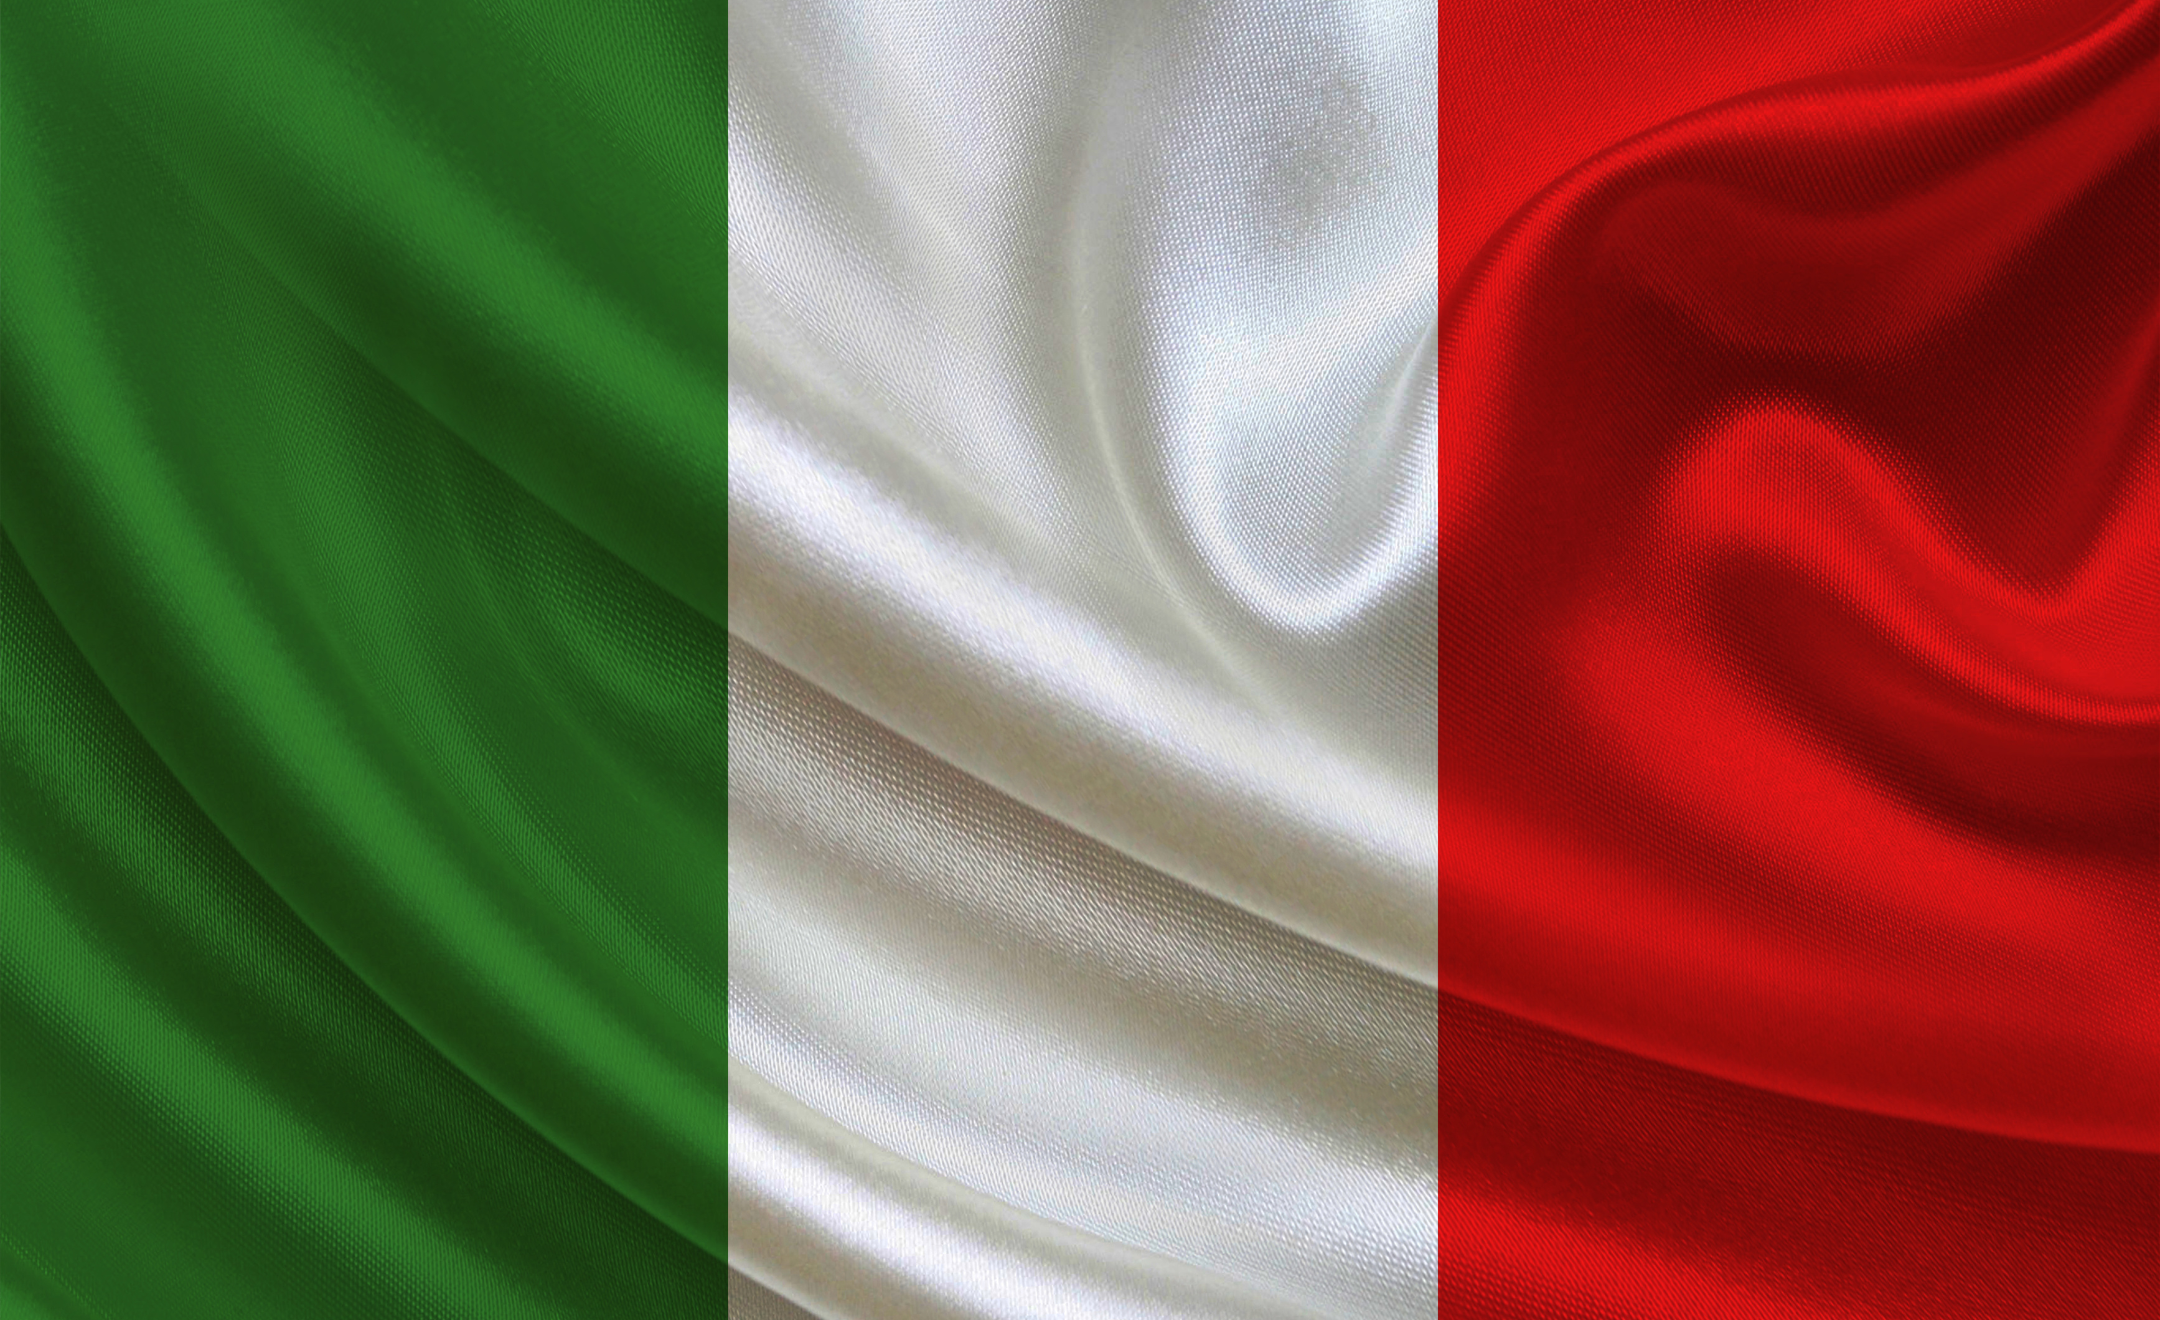 image of the Italian flag